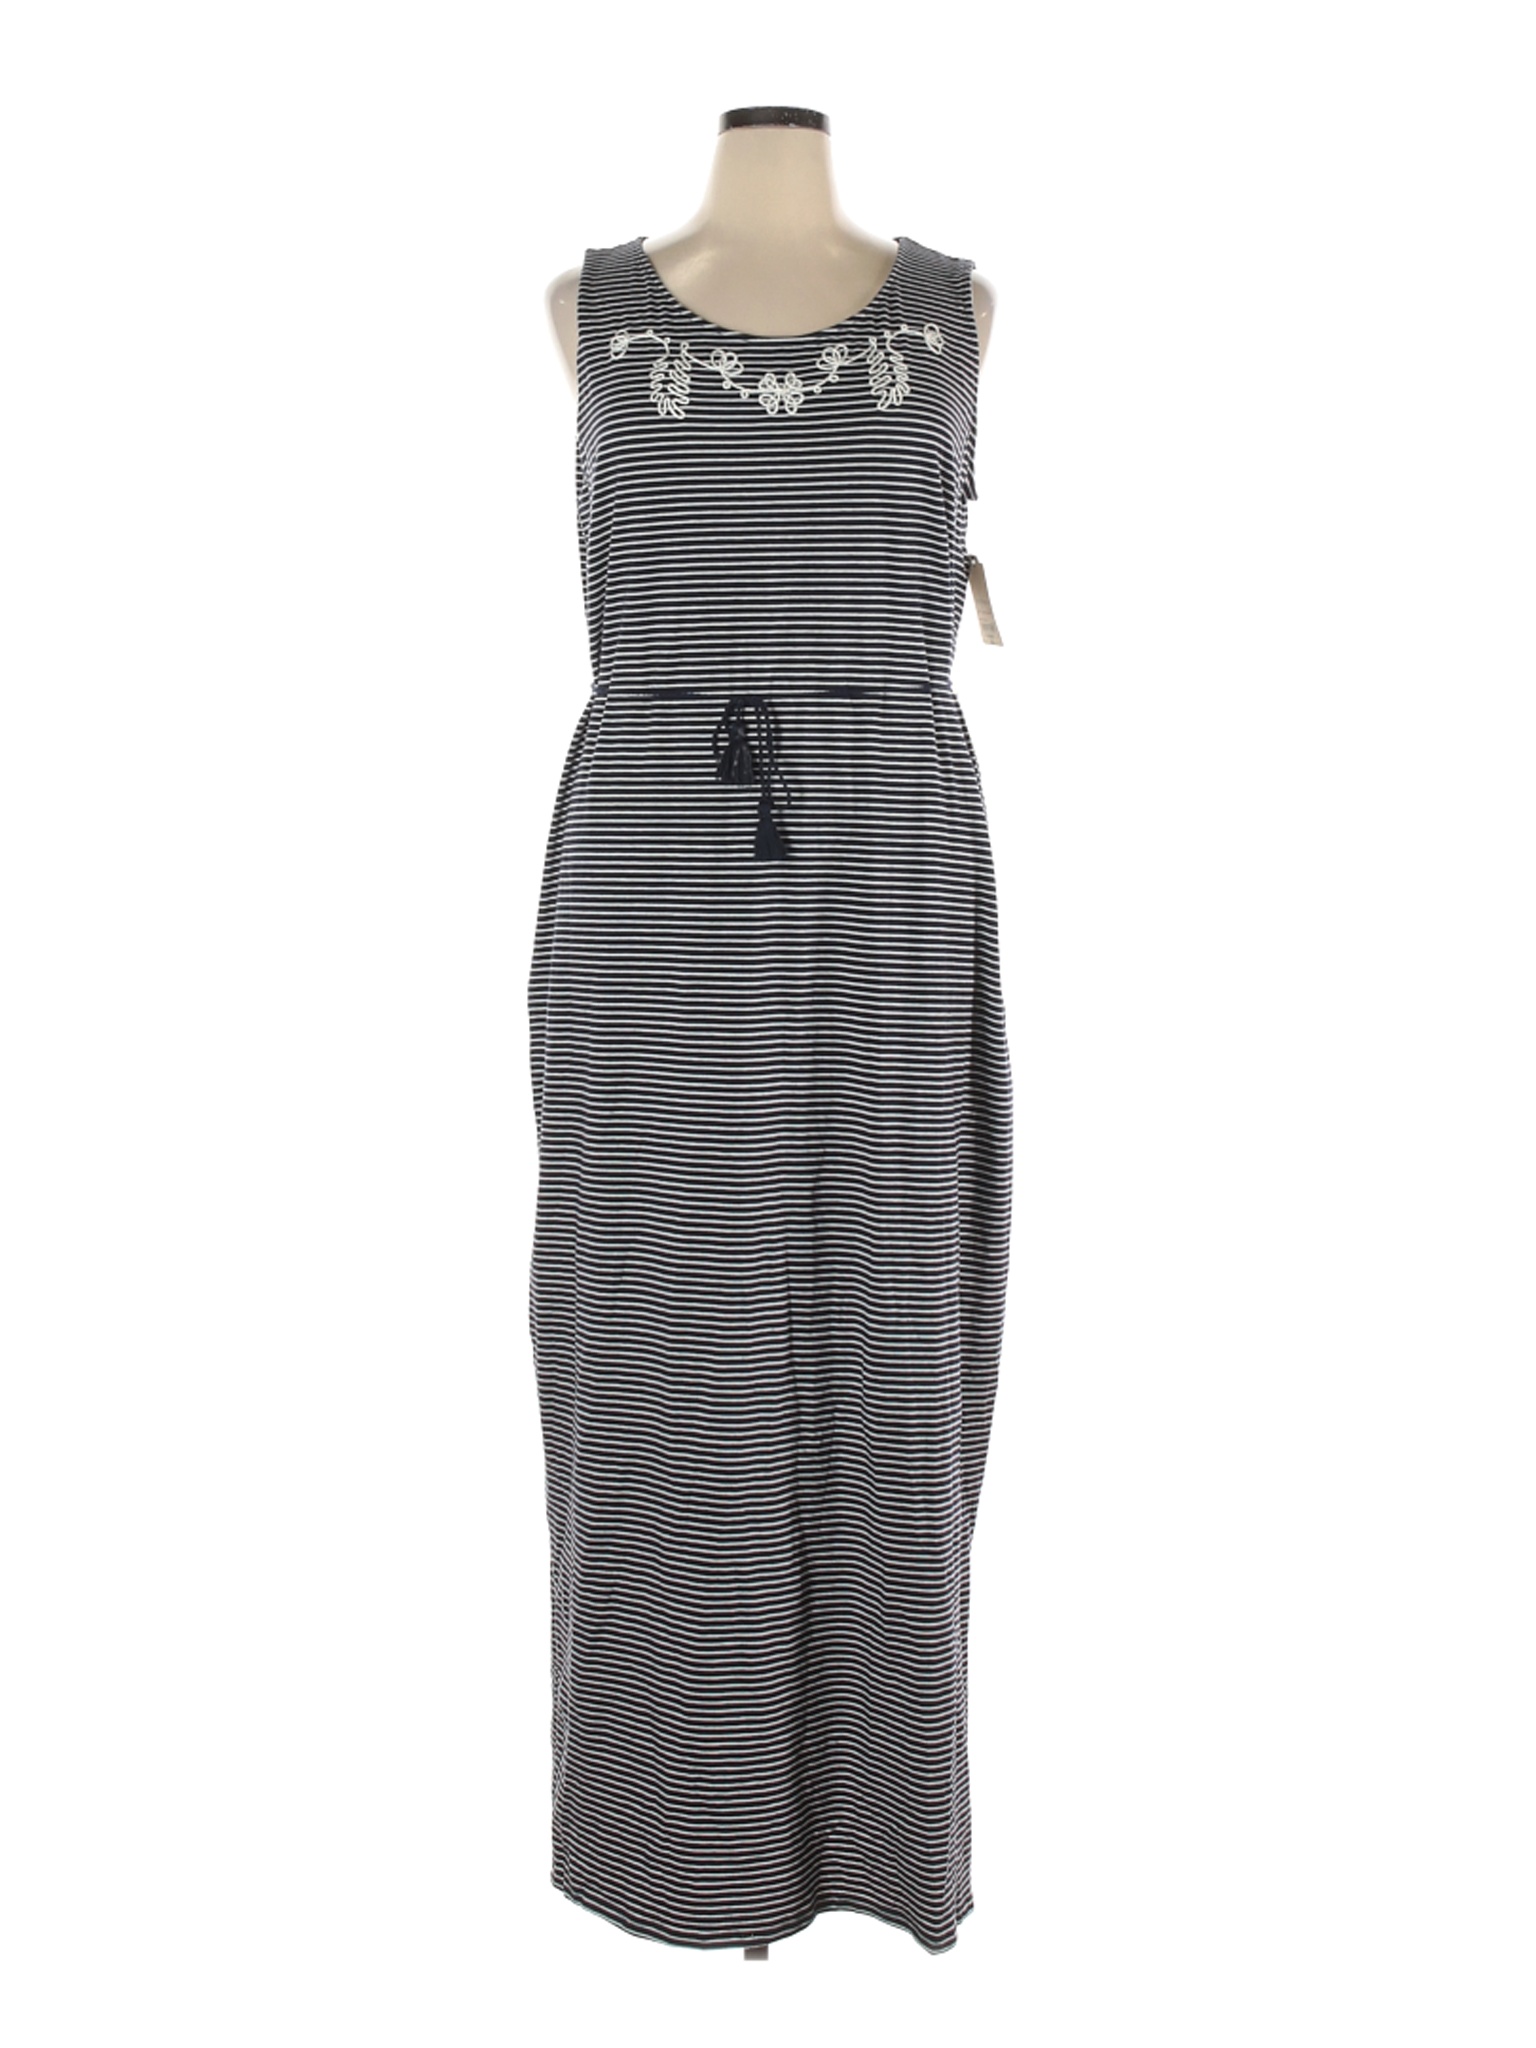 NWT St. John's Bay Women Gray Casual Dress XL | eBay